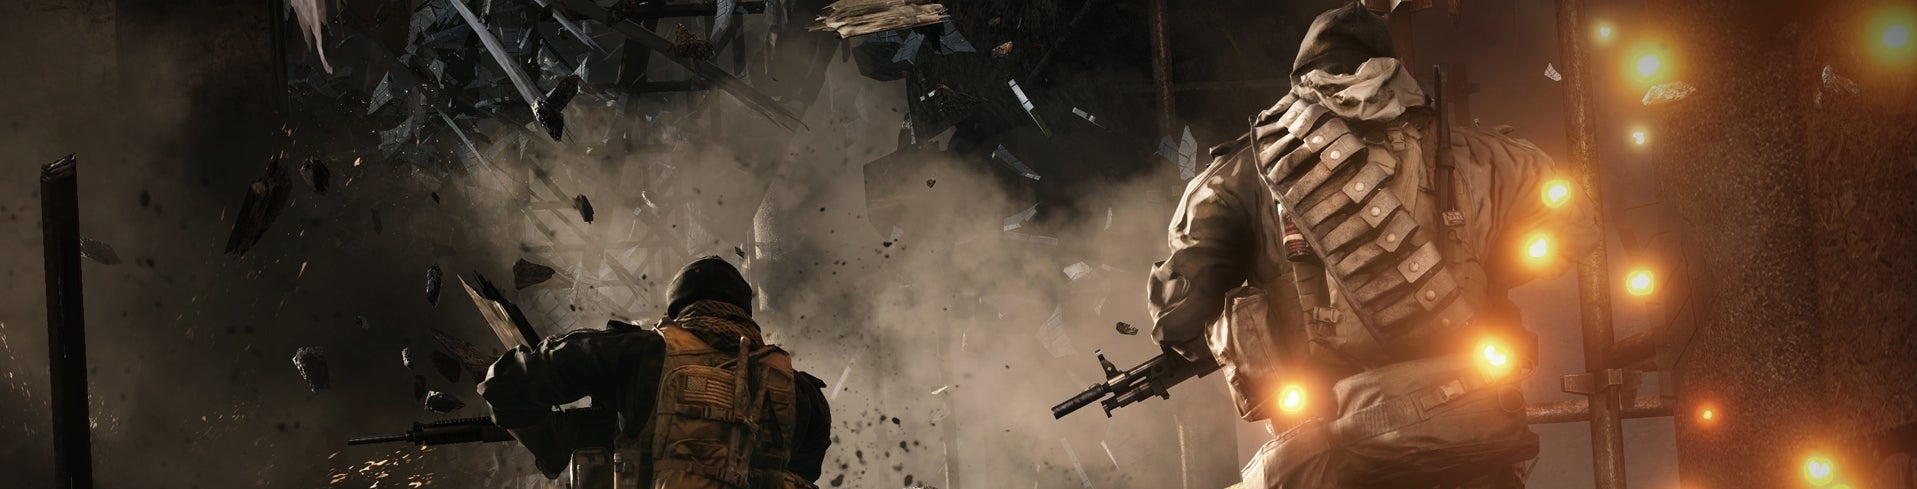 Bilder zu Eg.de Frühstart - Titan, Battlefield 4, Kojima